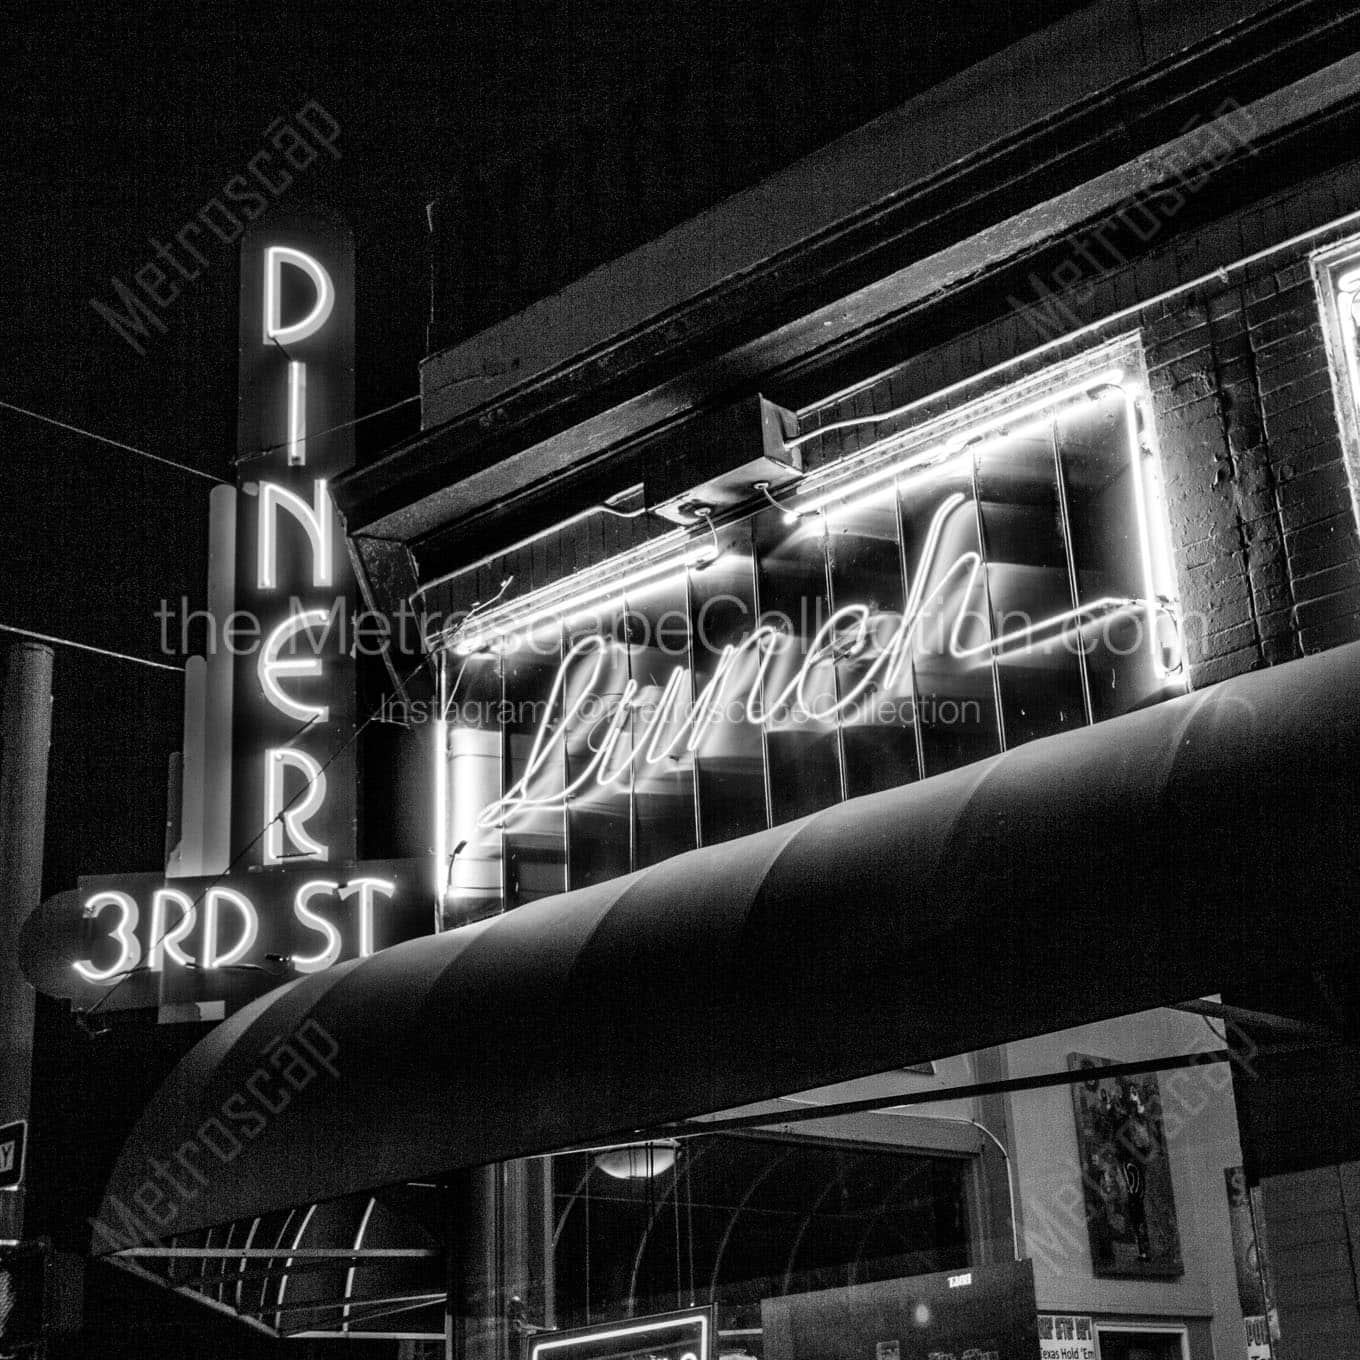 3rd street diner at night Black & White Wall Art